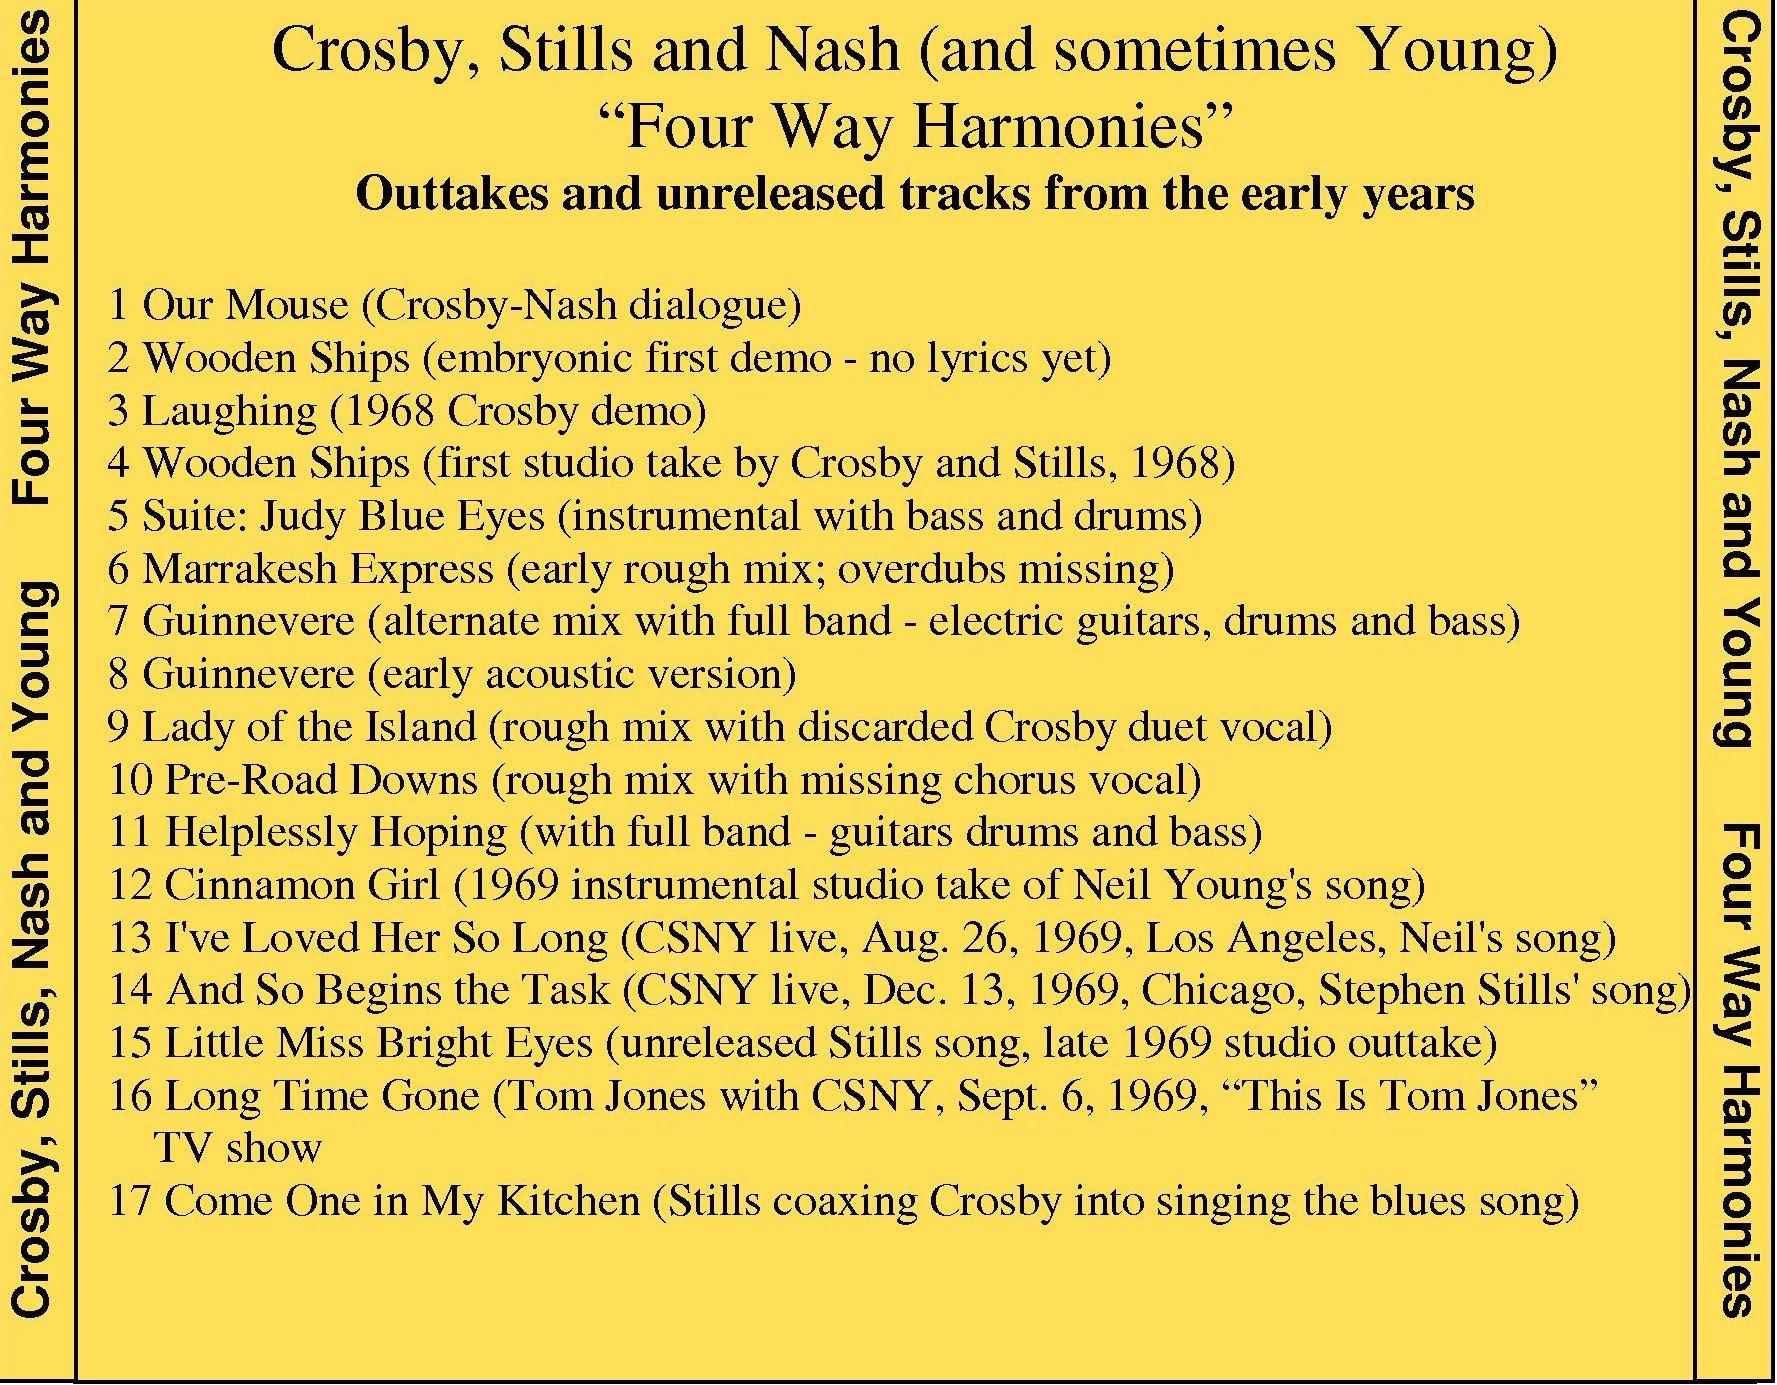 CrosbyStillsNashYoung1968-1969FourWayHarmoniesCompilation (2).jpg